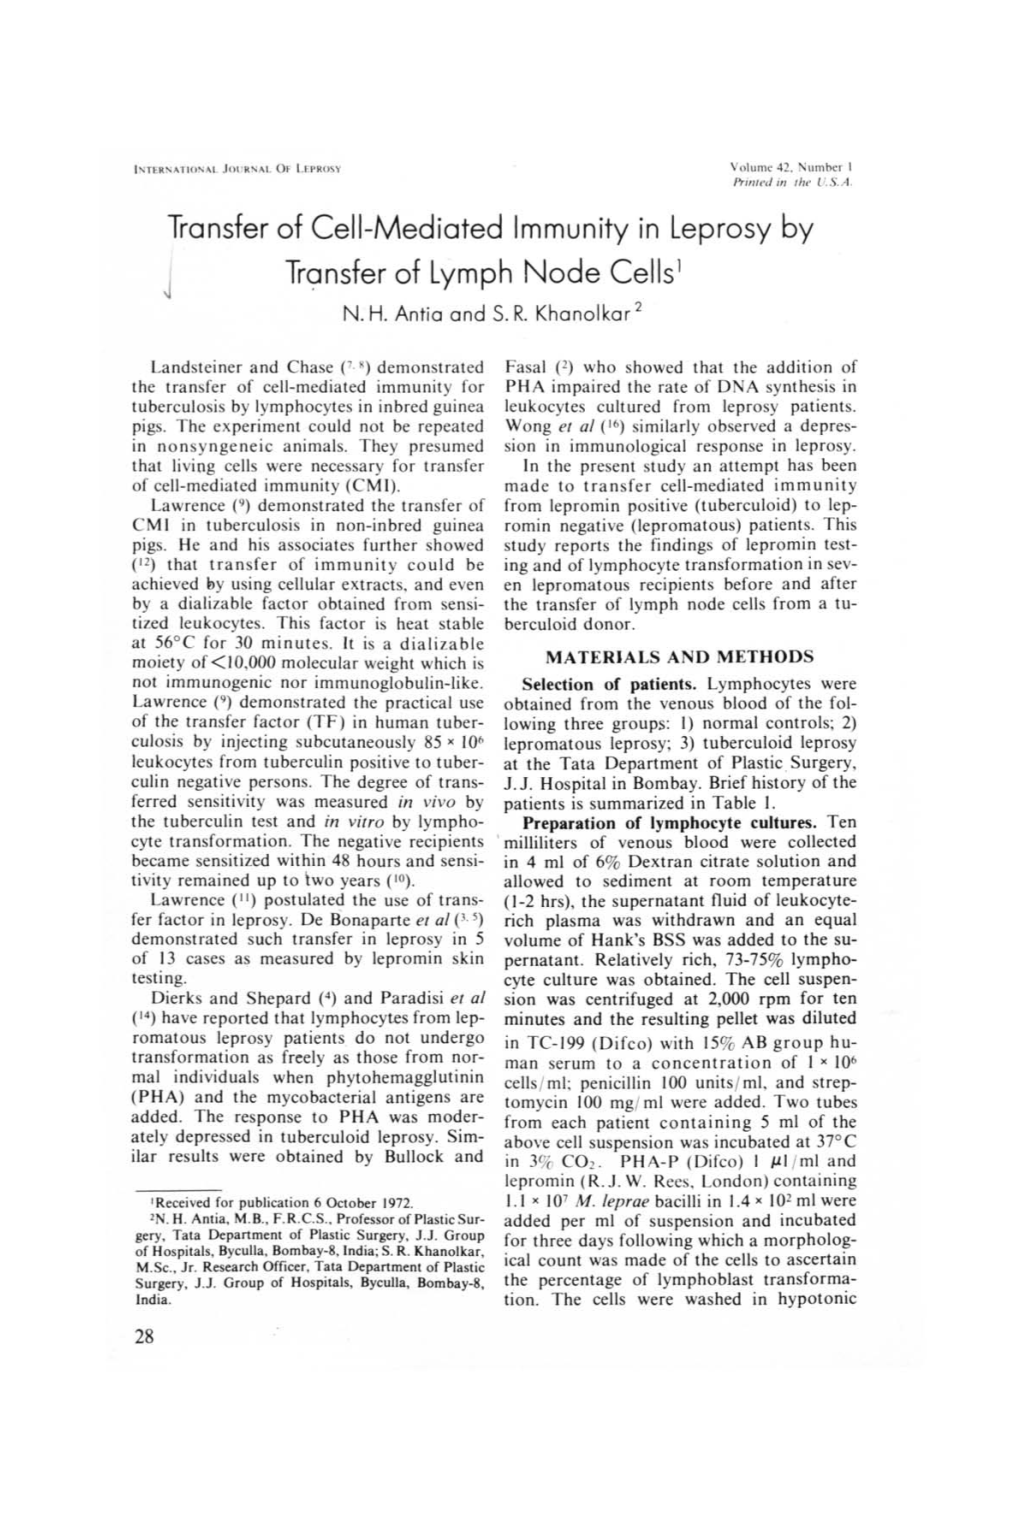 Transfer of Cell-Mediated Immunity in Leprosy by Tn;Jnsfer of Lymph